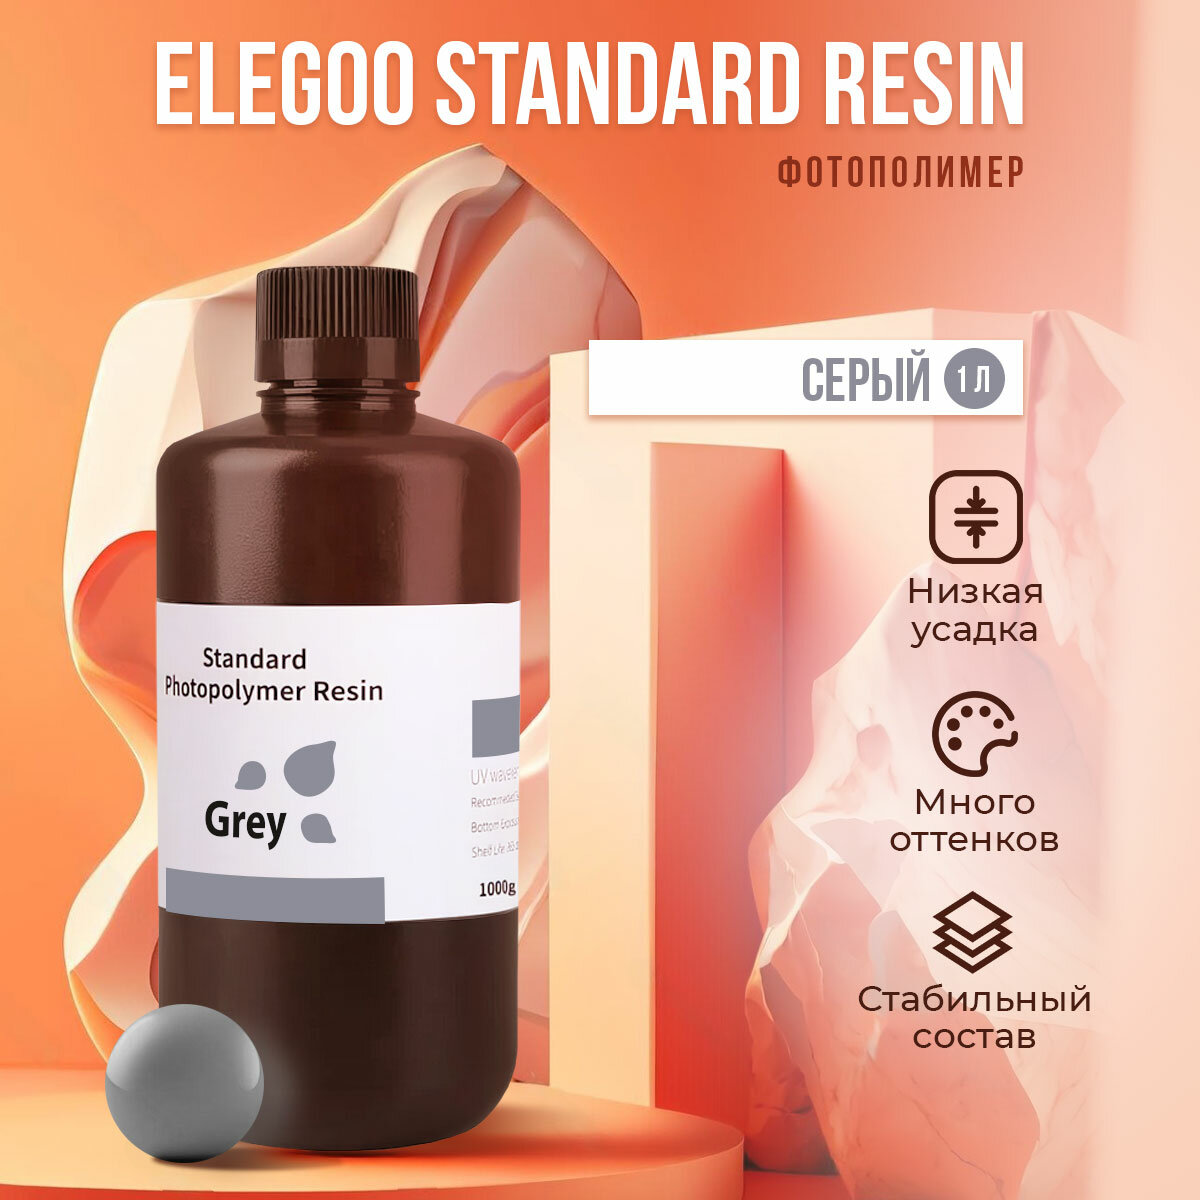 Фотополимер Elegoo Standard Resin Серый, 1 л